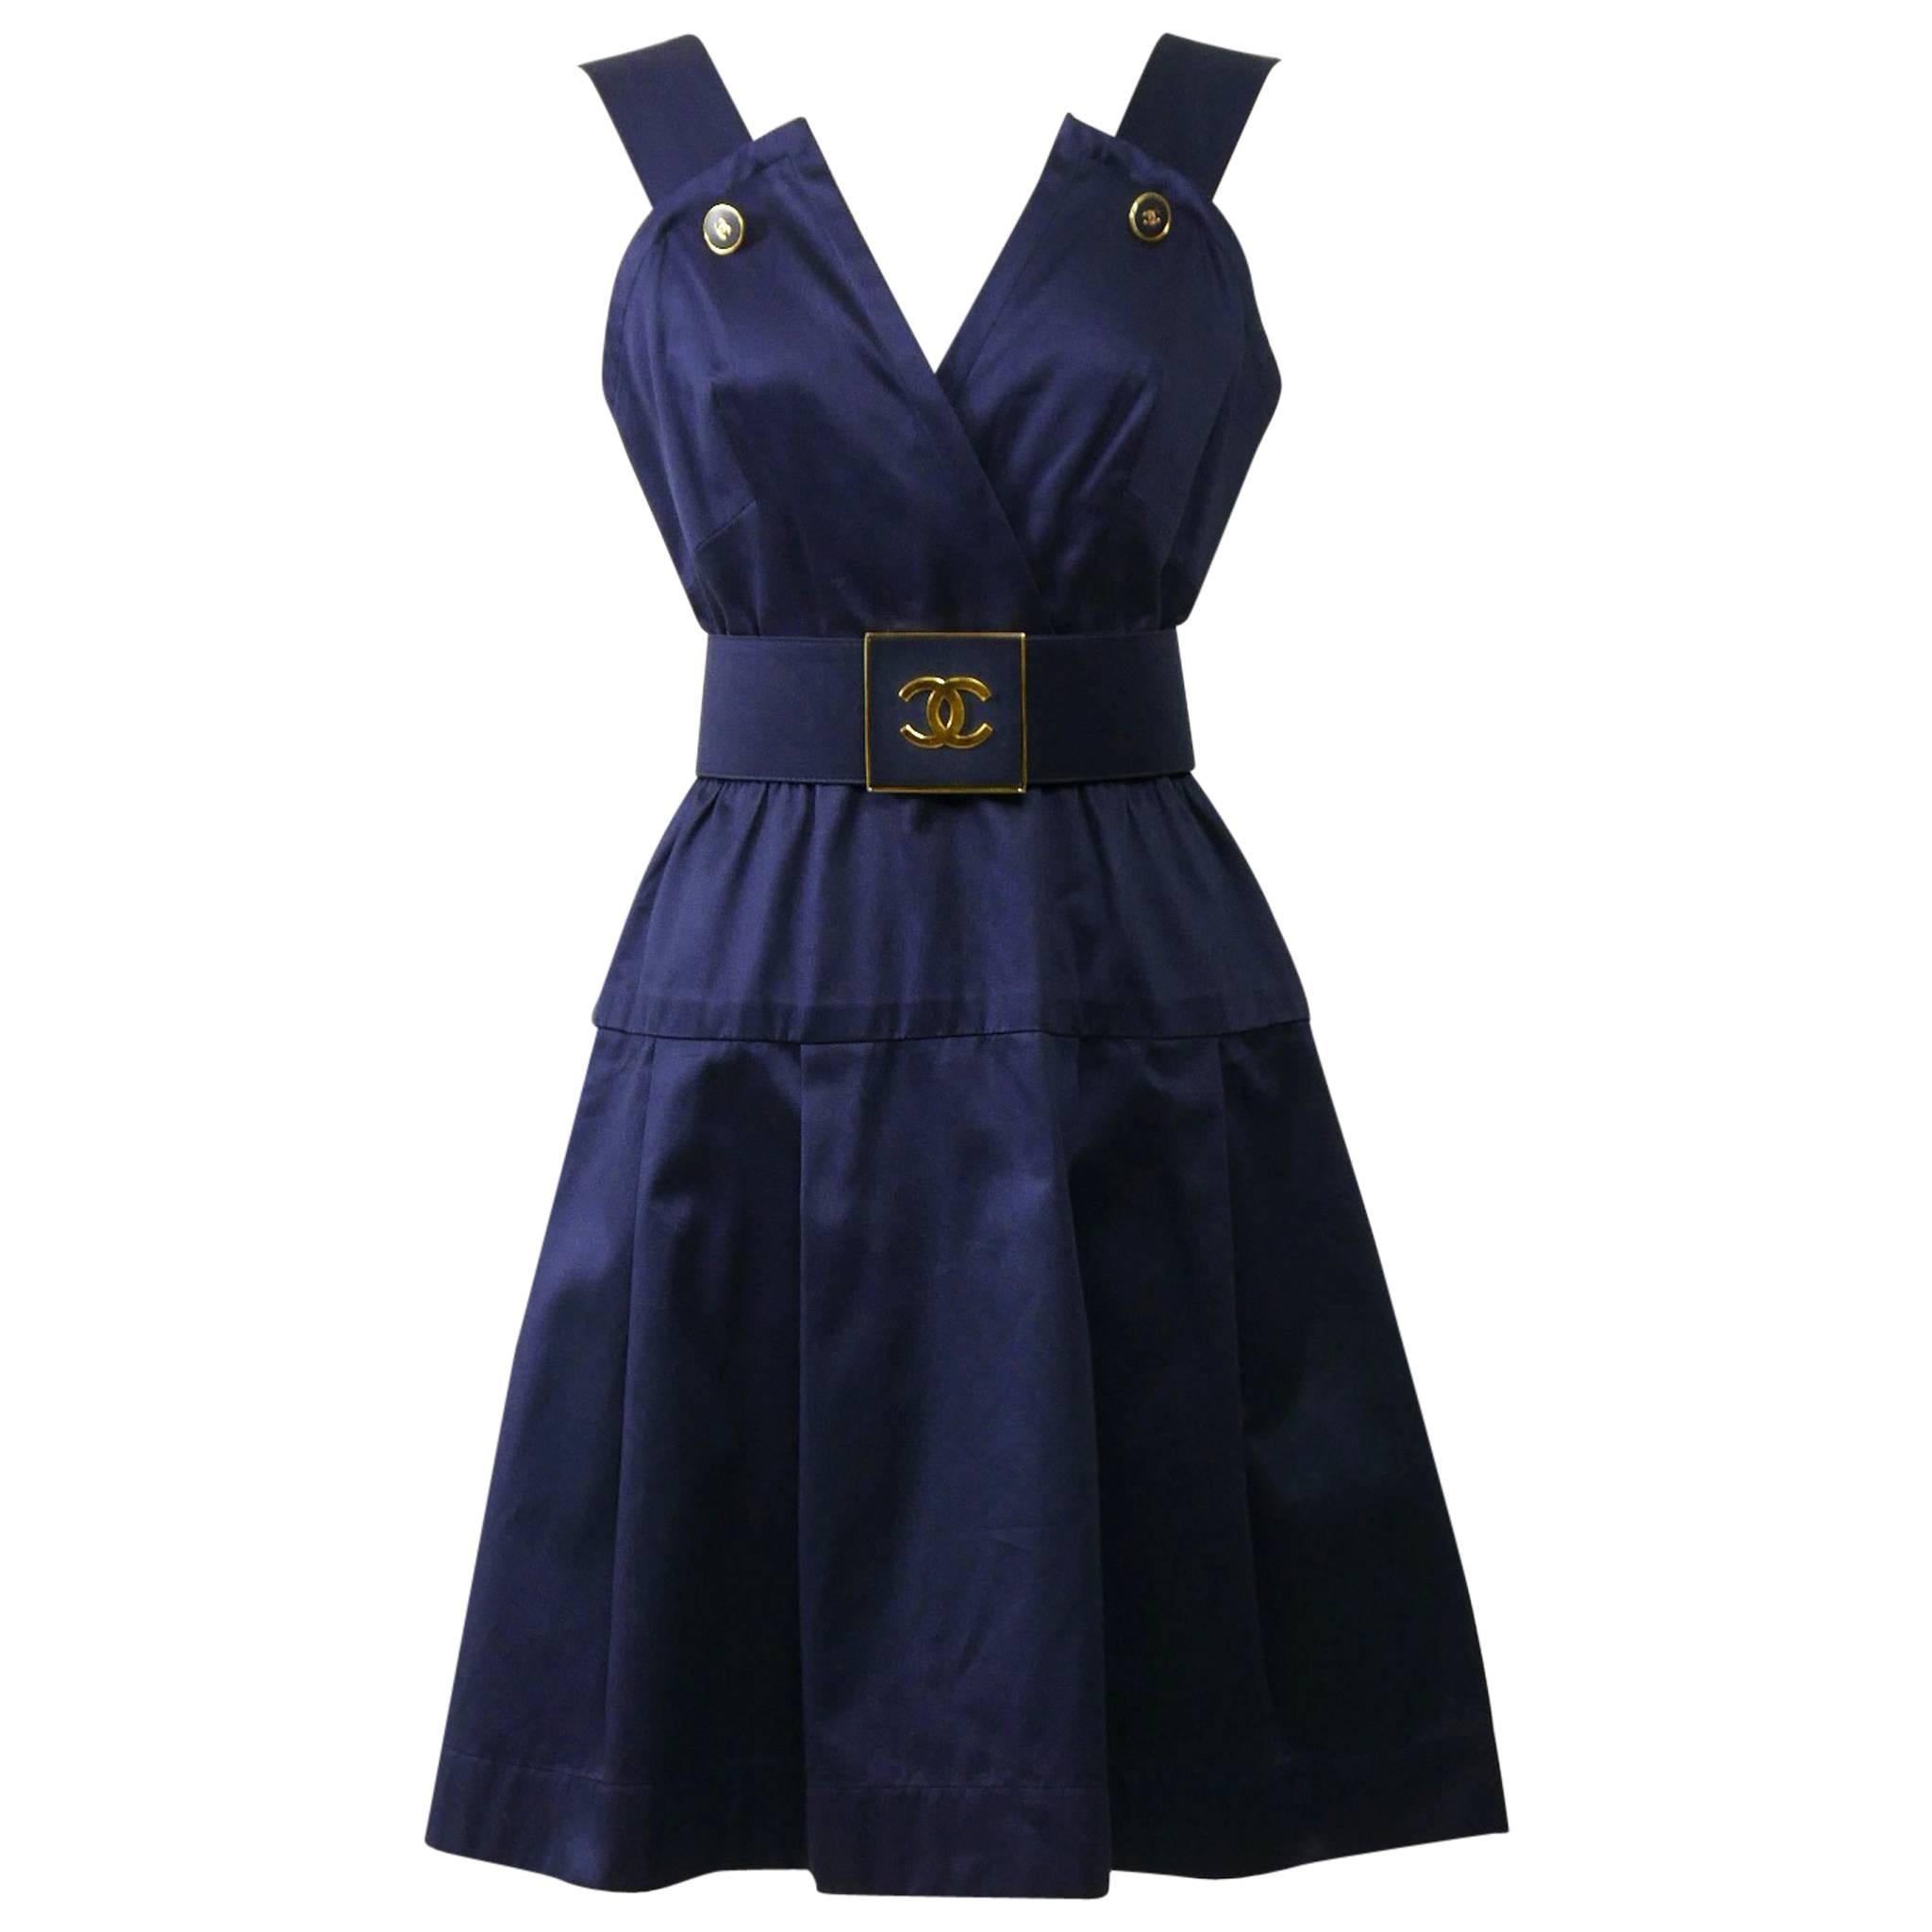 1990s CHANEL Blue Navy Cotton Dress